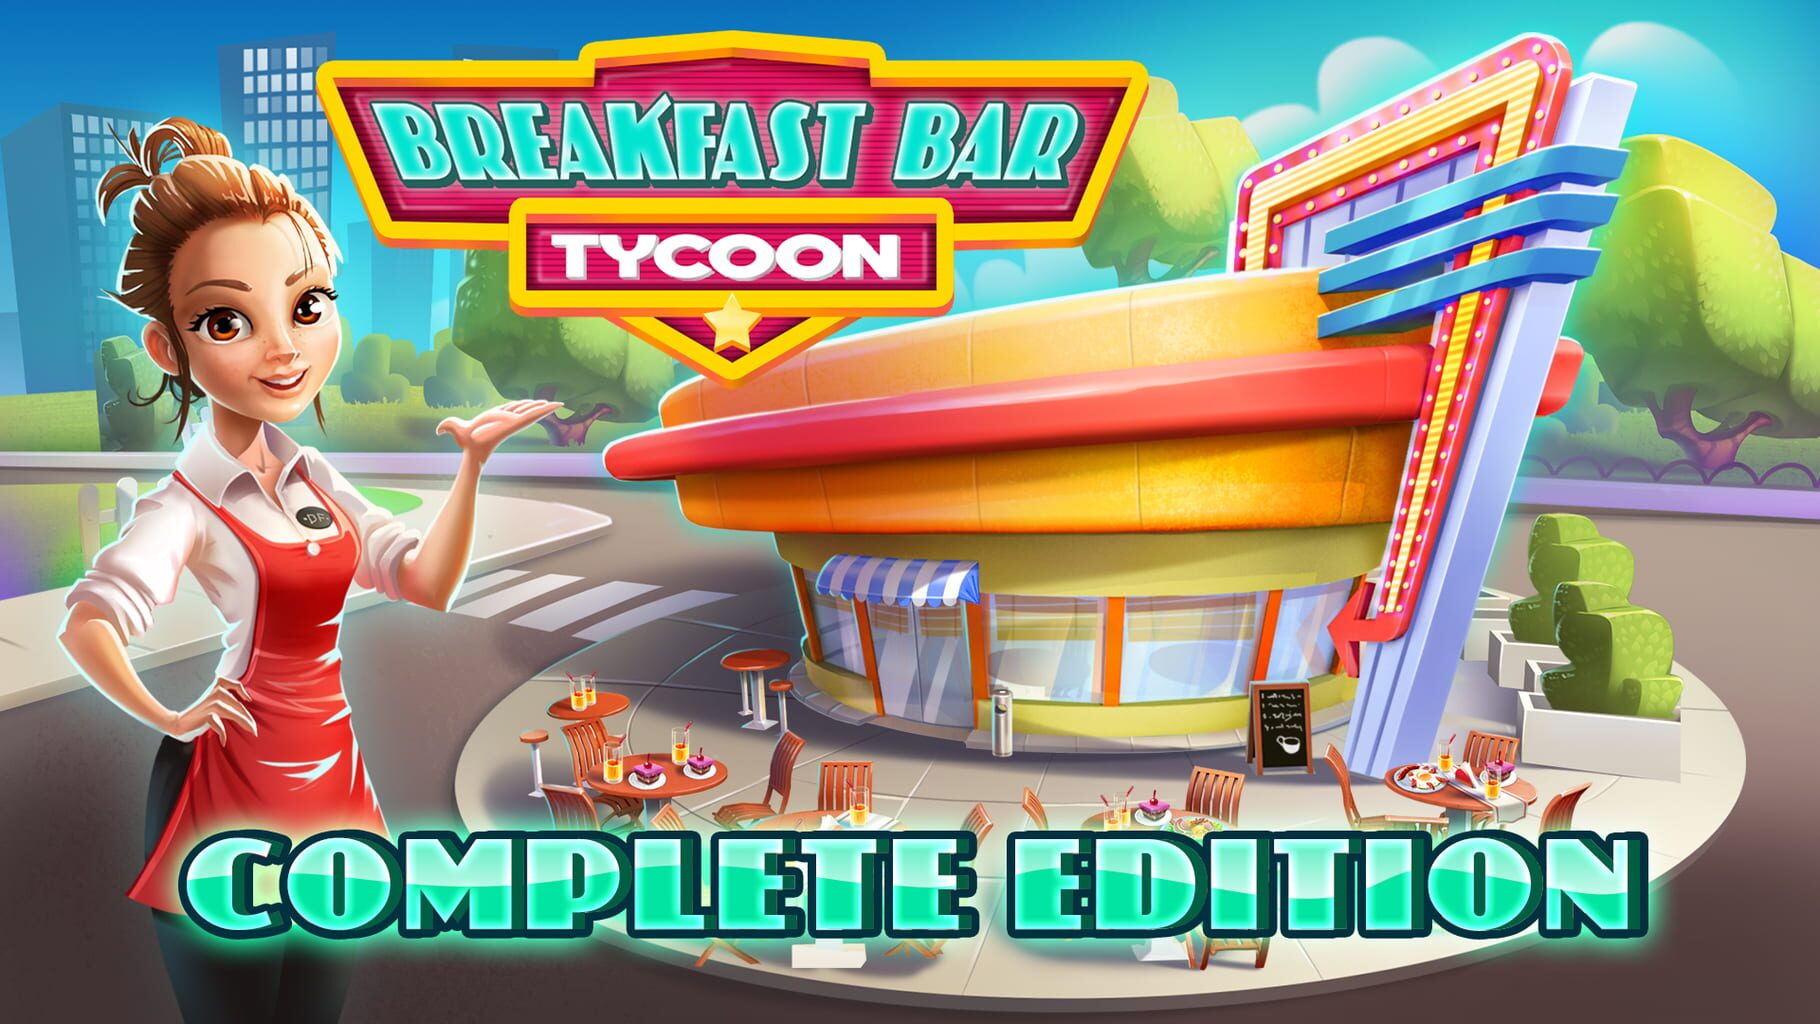 Breakfast Bar Tycoon: Complete Edition artwork